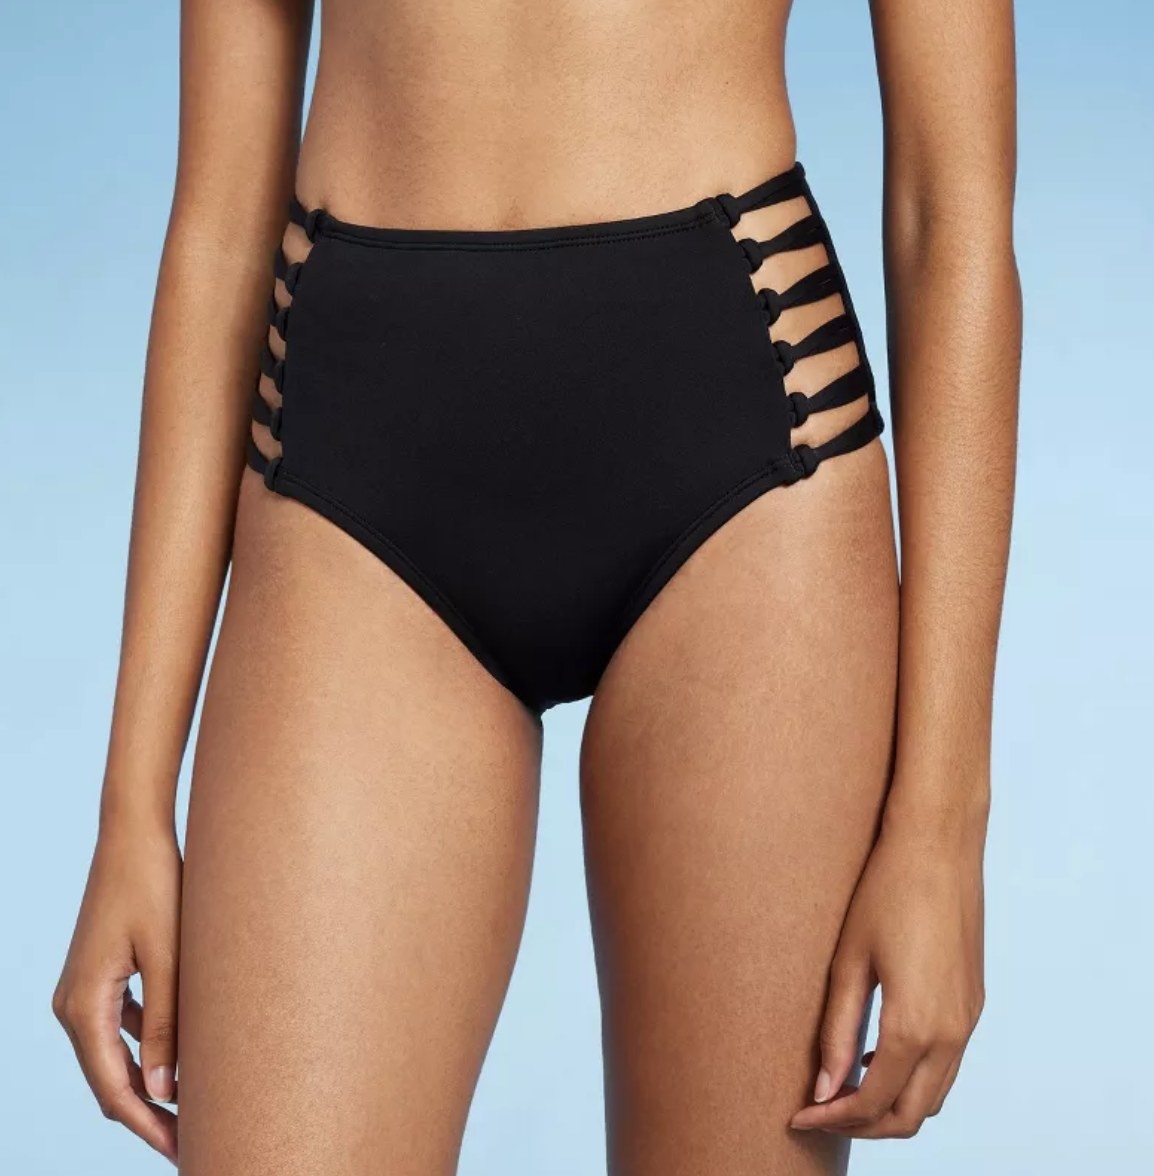 A black high waisted cutout bikini bottom